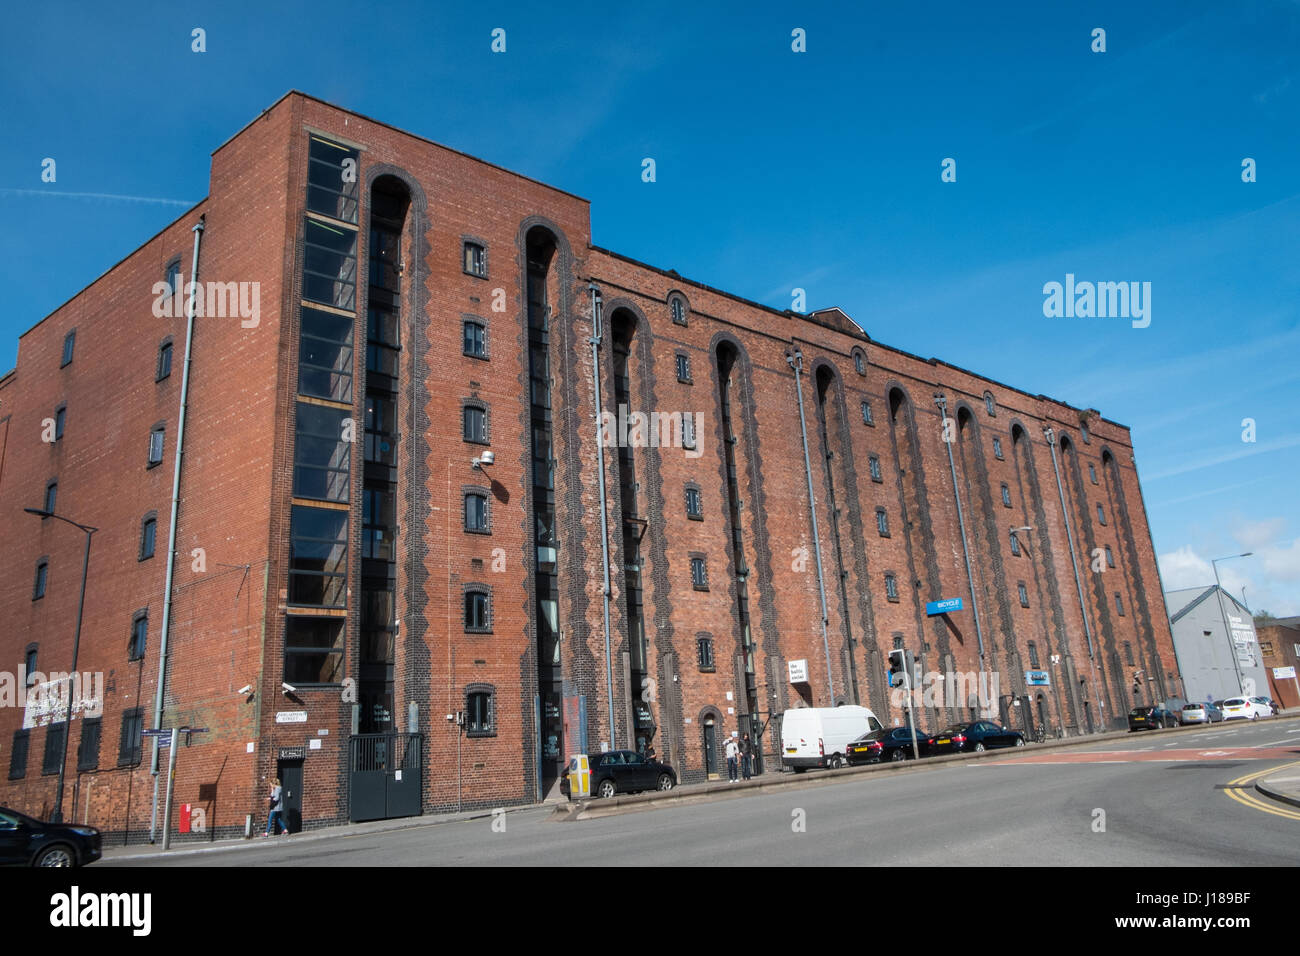 Contemporary Urban Centre,warehouse,Baltic Triangle,Liverpool,Merseyside,England,UNESCO,World Heritage City,City,Northern,North,England,English,UK. Stock Photo